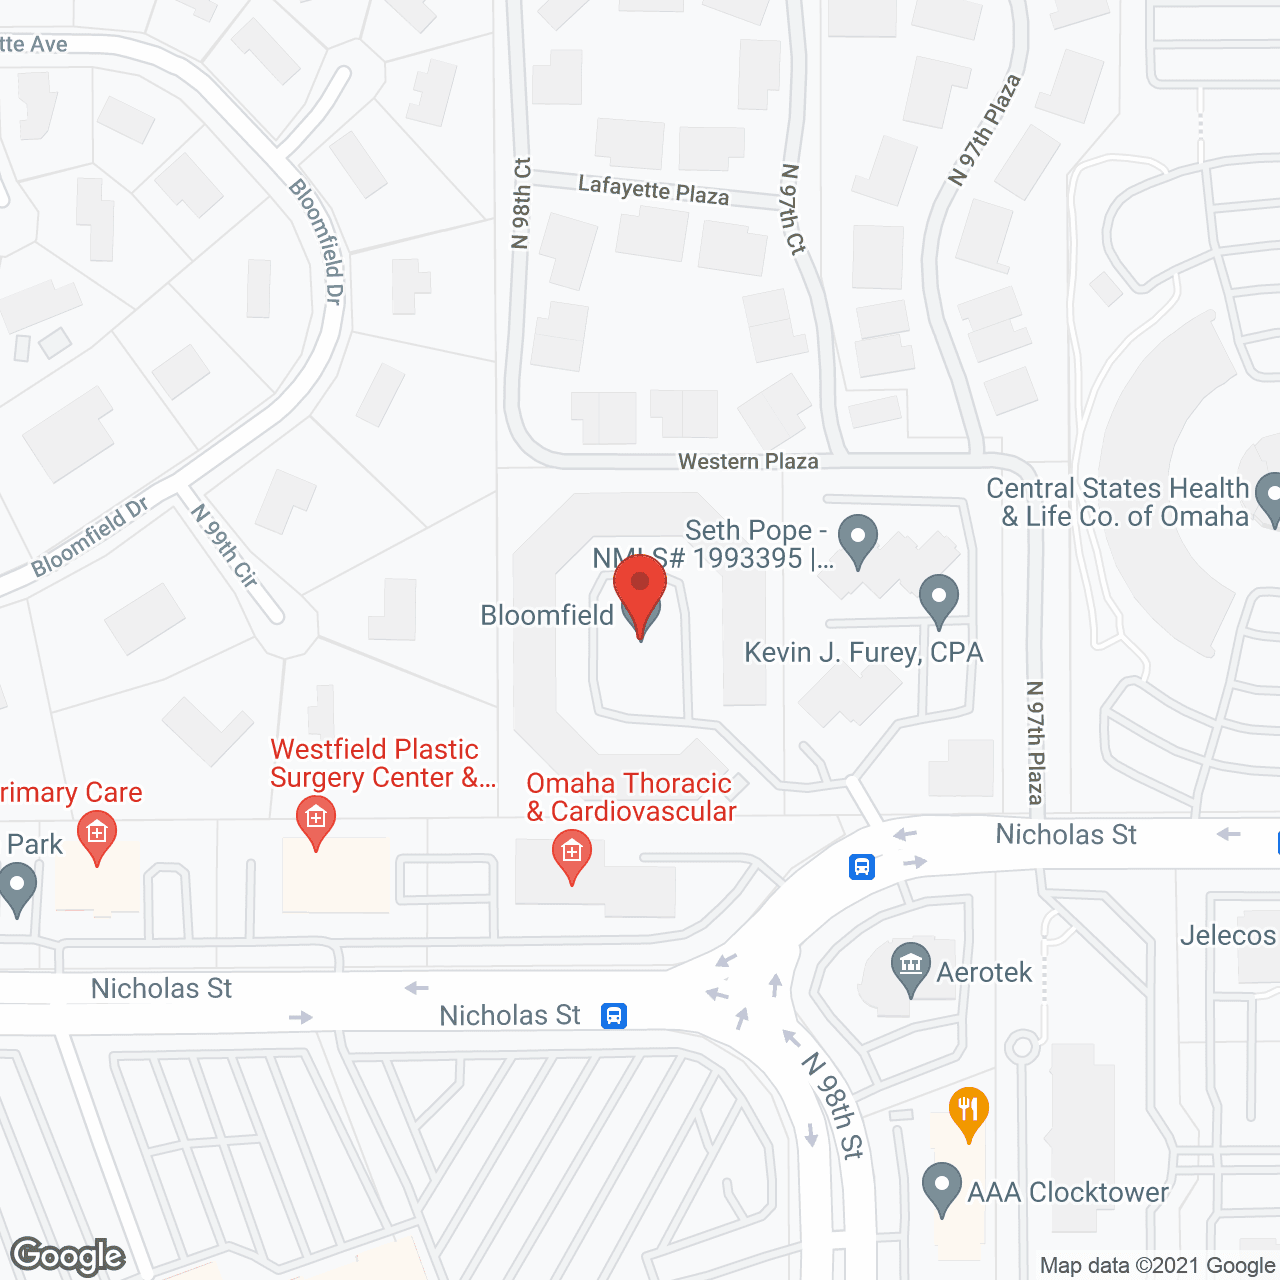 Bloomfield in google map